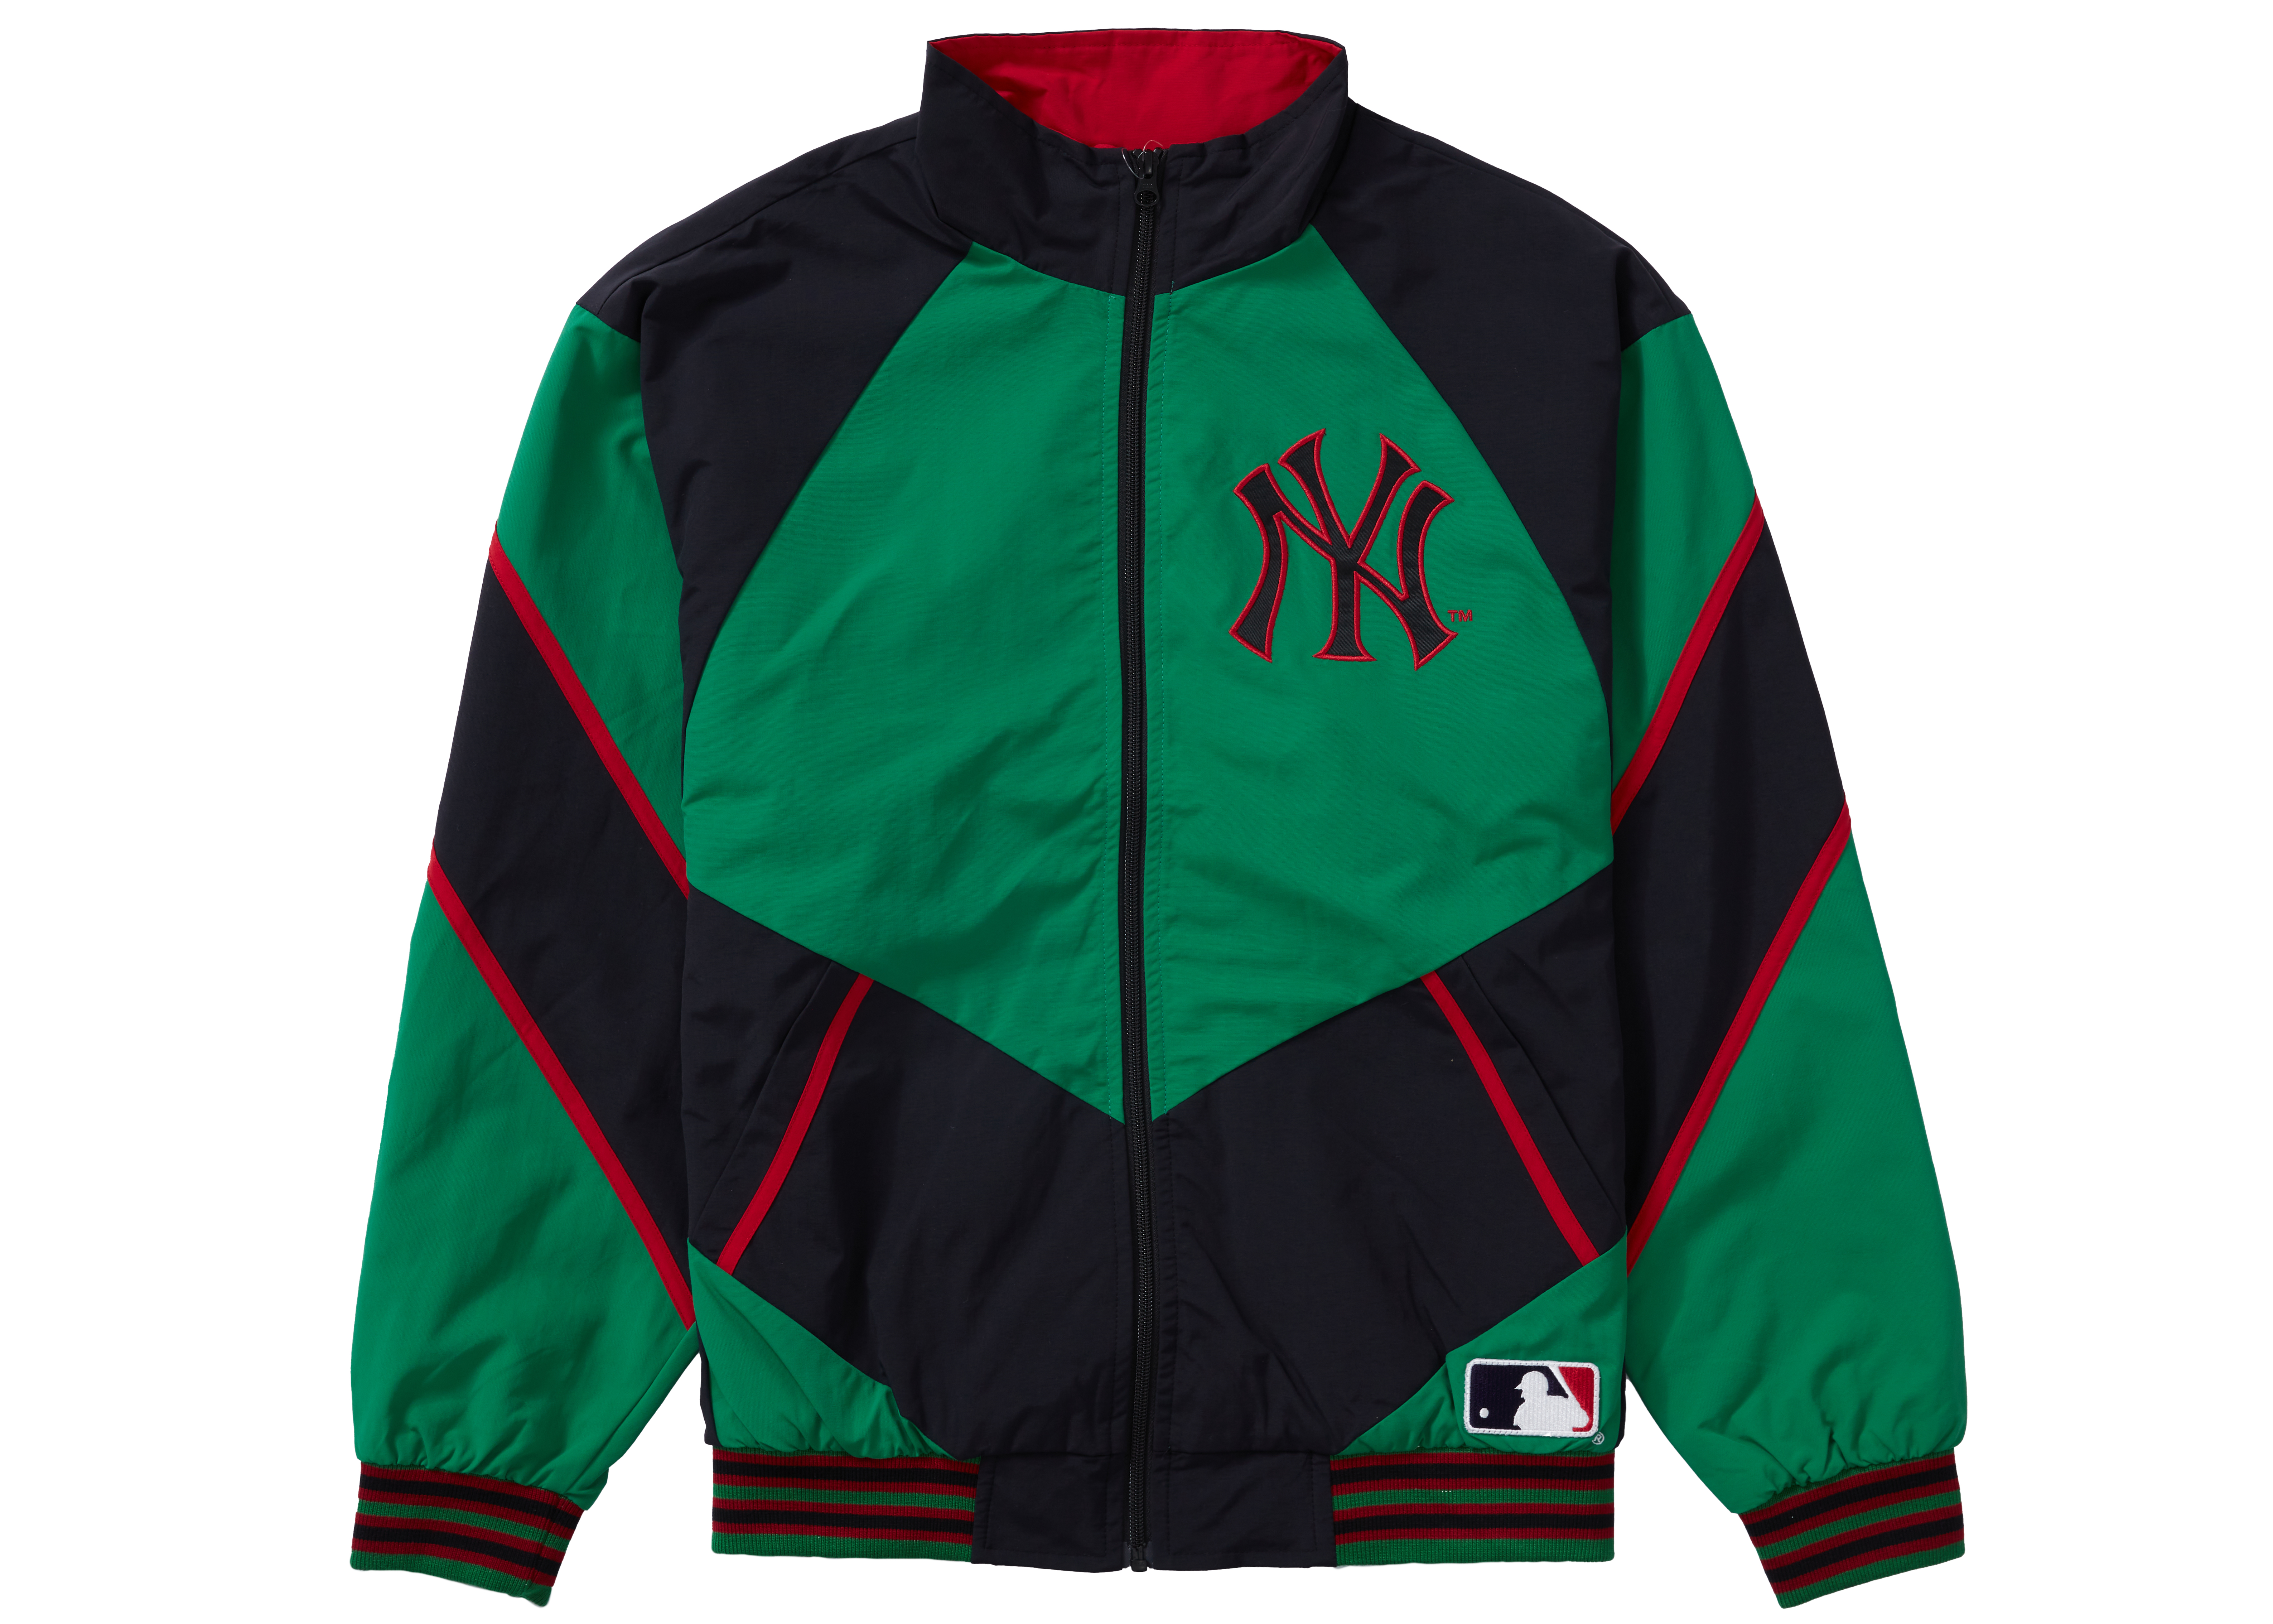 new york yankees supreme jacket Off 76% - www.svrinfotech.net